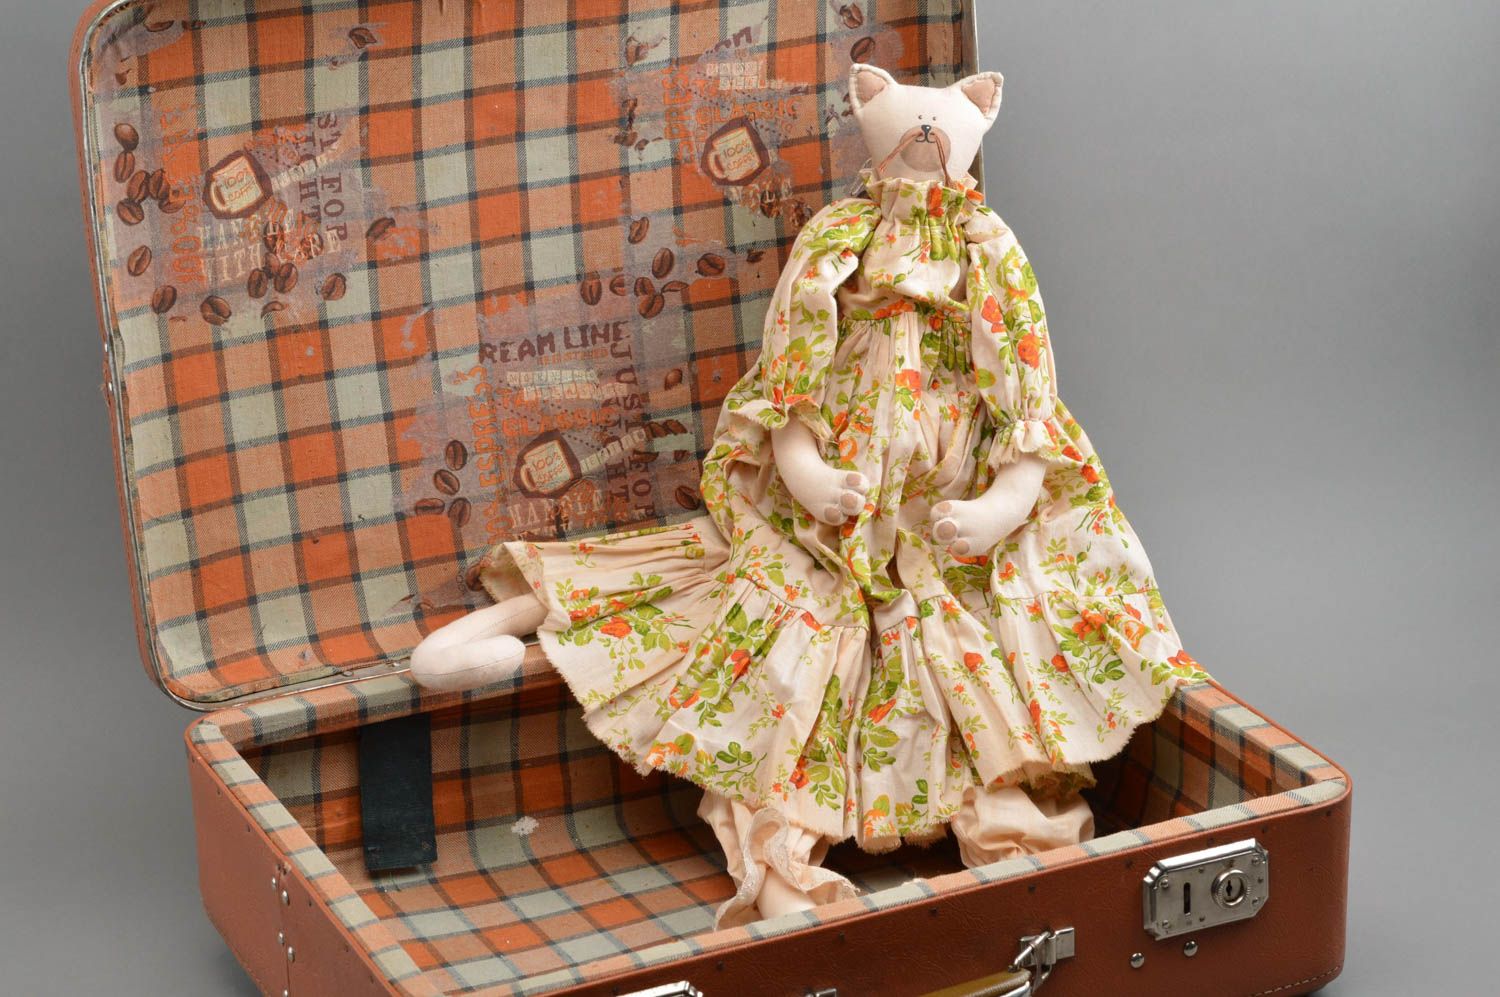 Fabric toy cat in dress handmade stuffed toy for interior decor nursery ideas photo 1